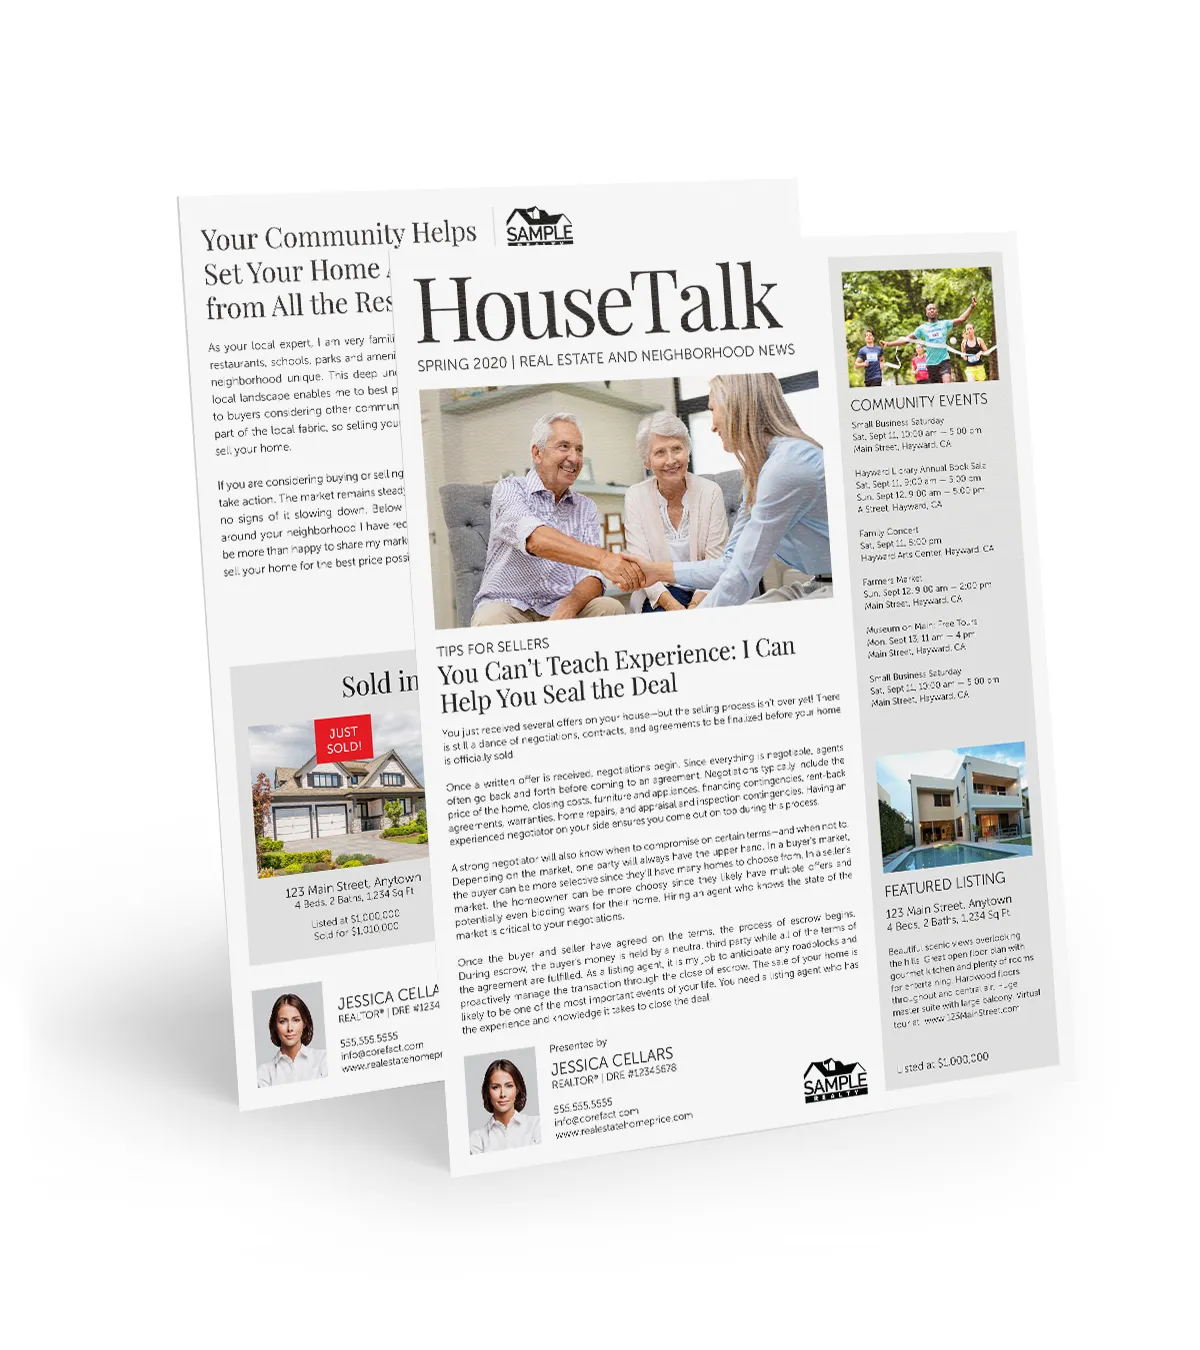 House Talk Newsletter - Closing The Deal